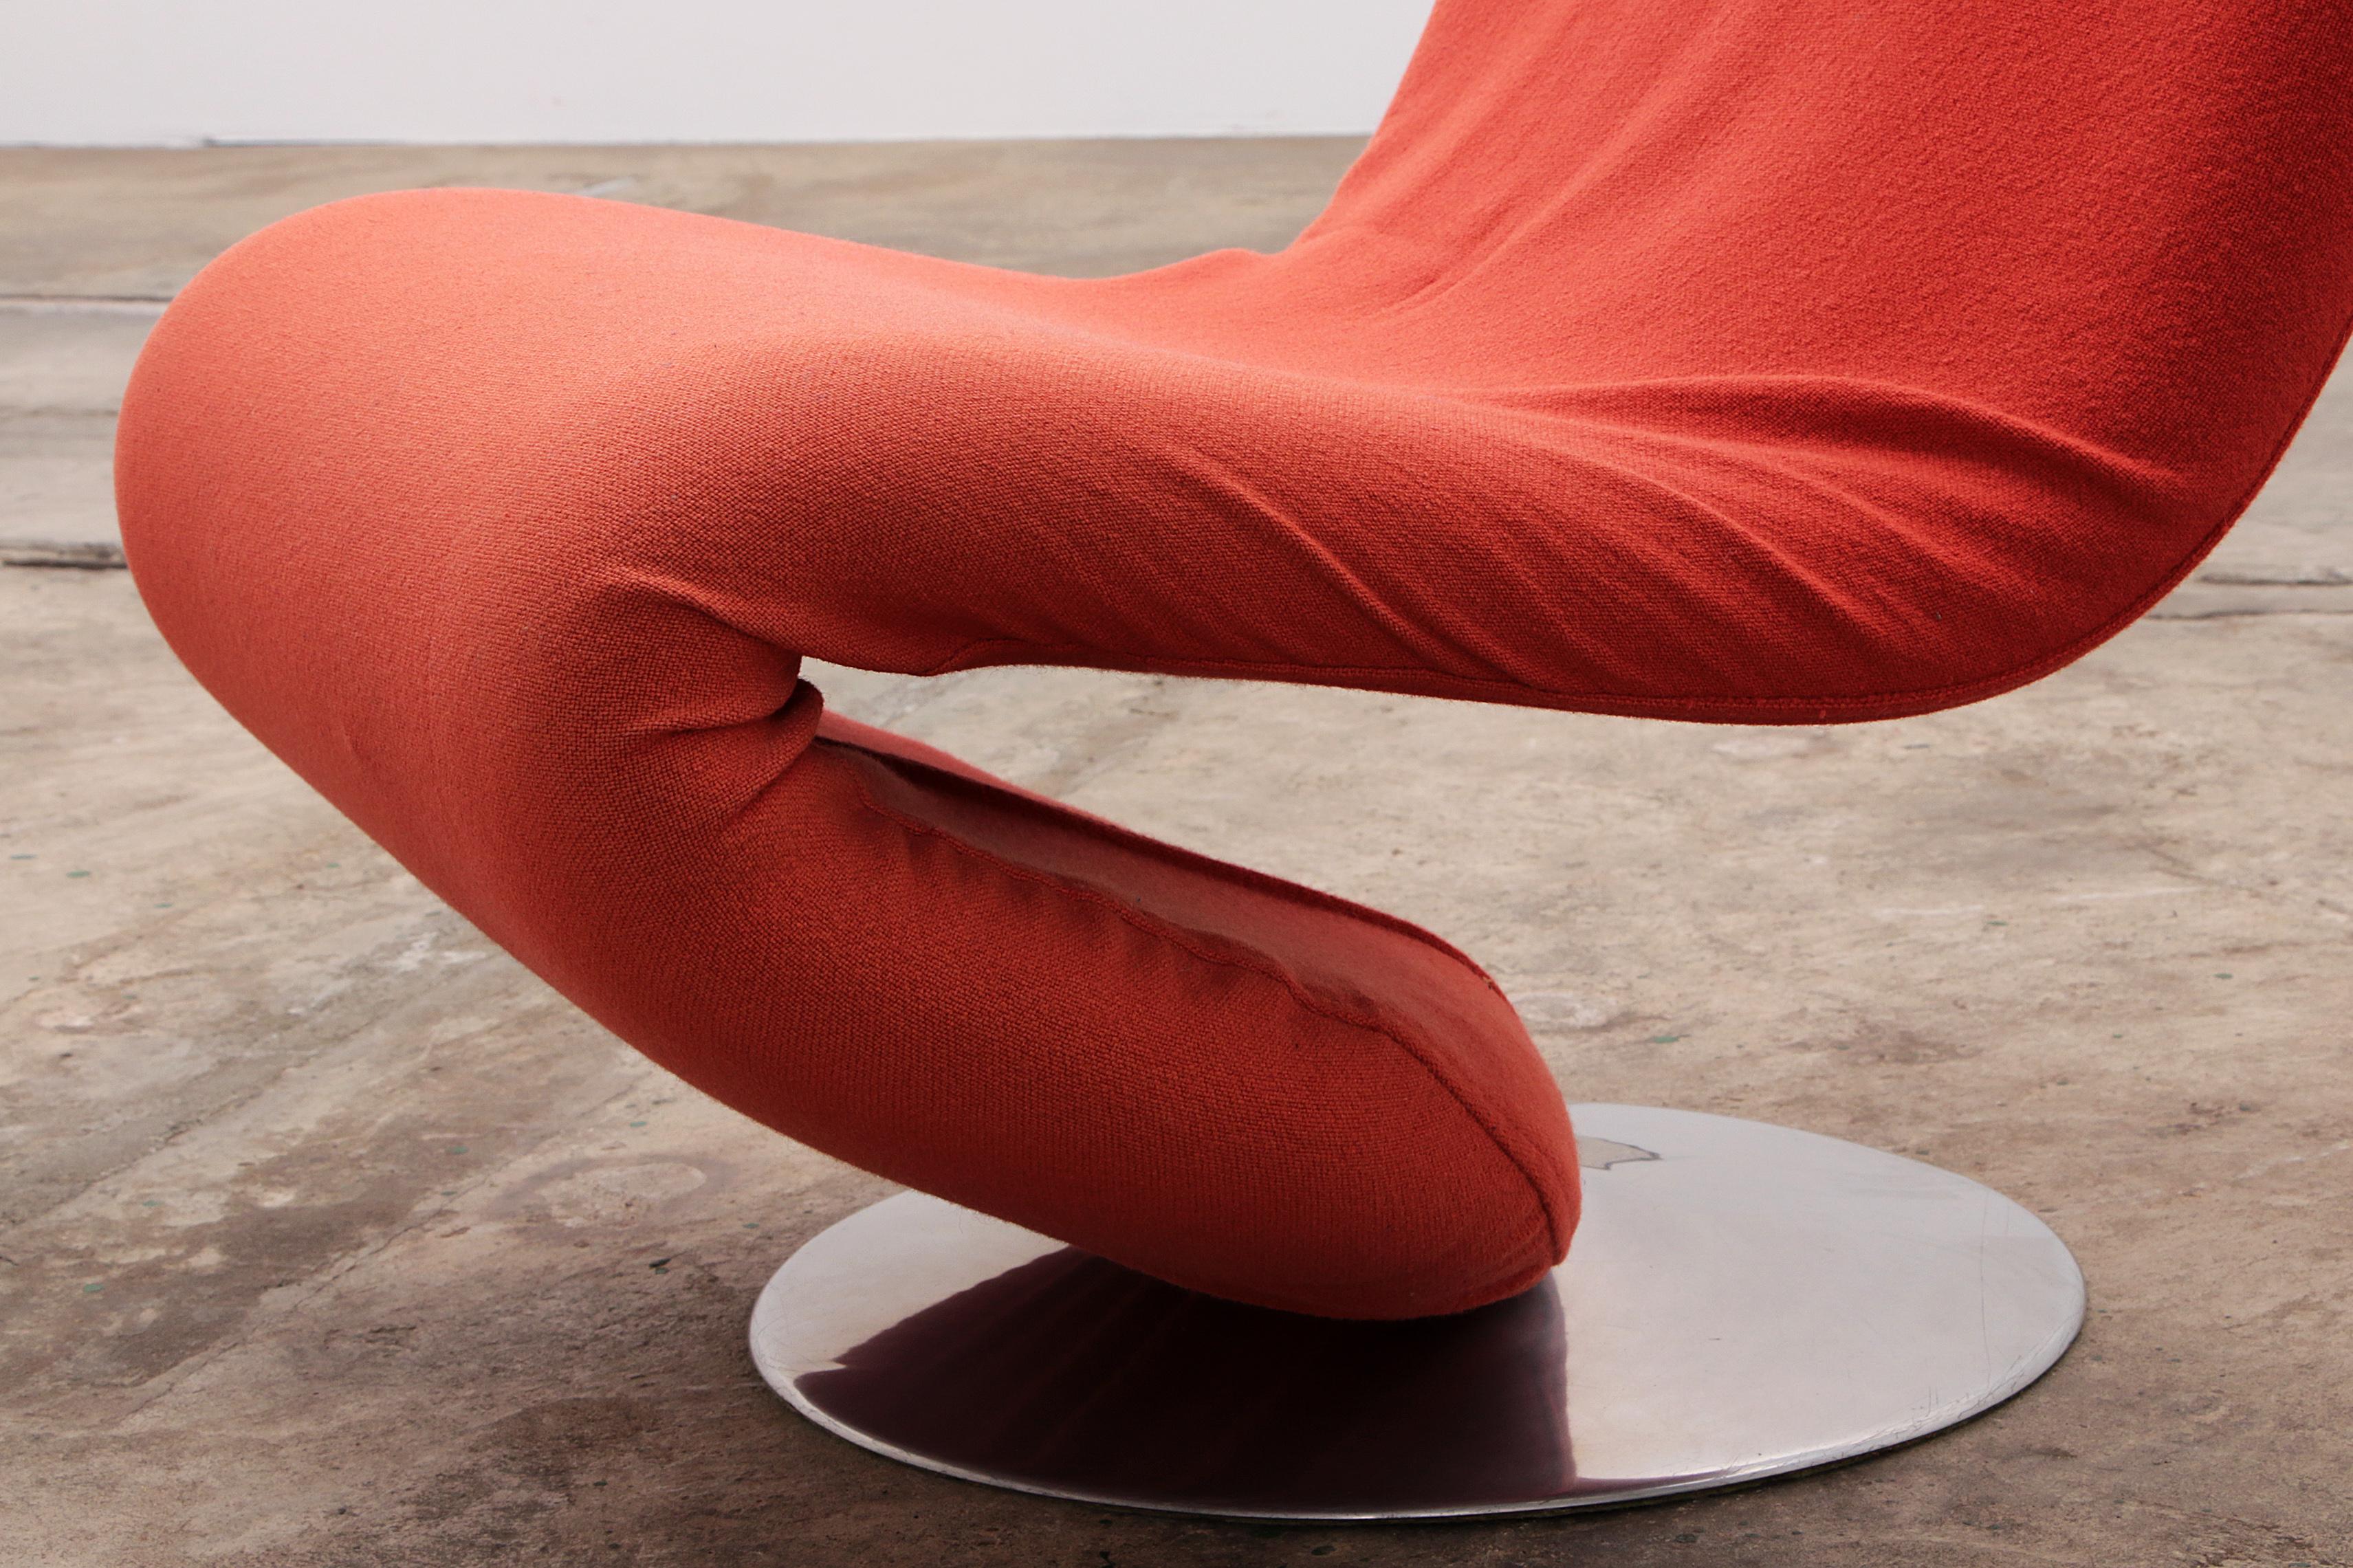 Verner Panton 1-2-3 Chair with High Backrest - Red/Orange, 1973 For Sale 2